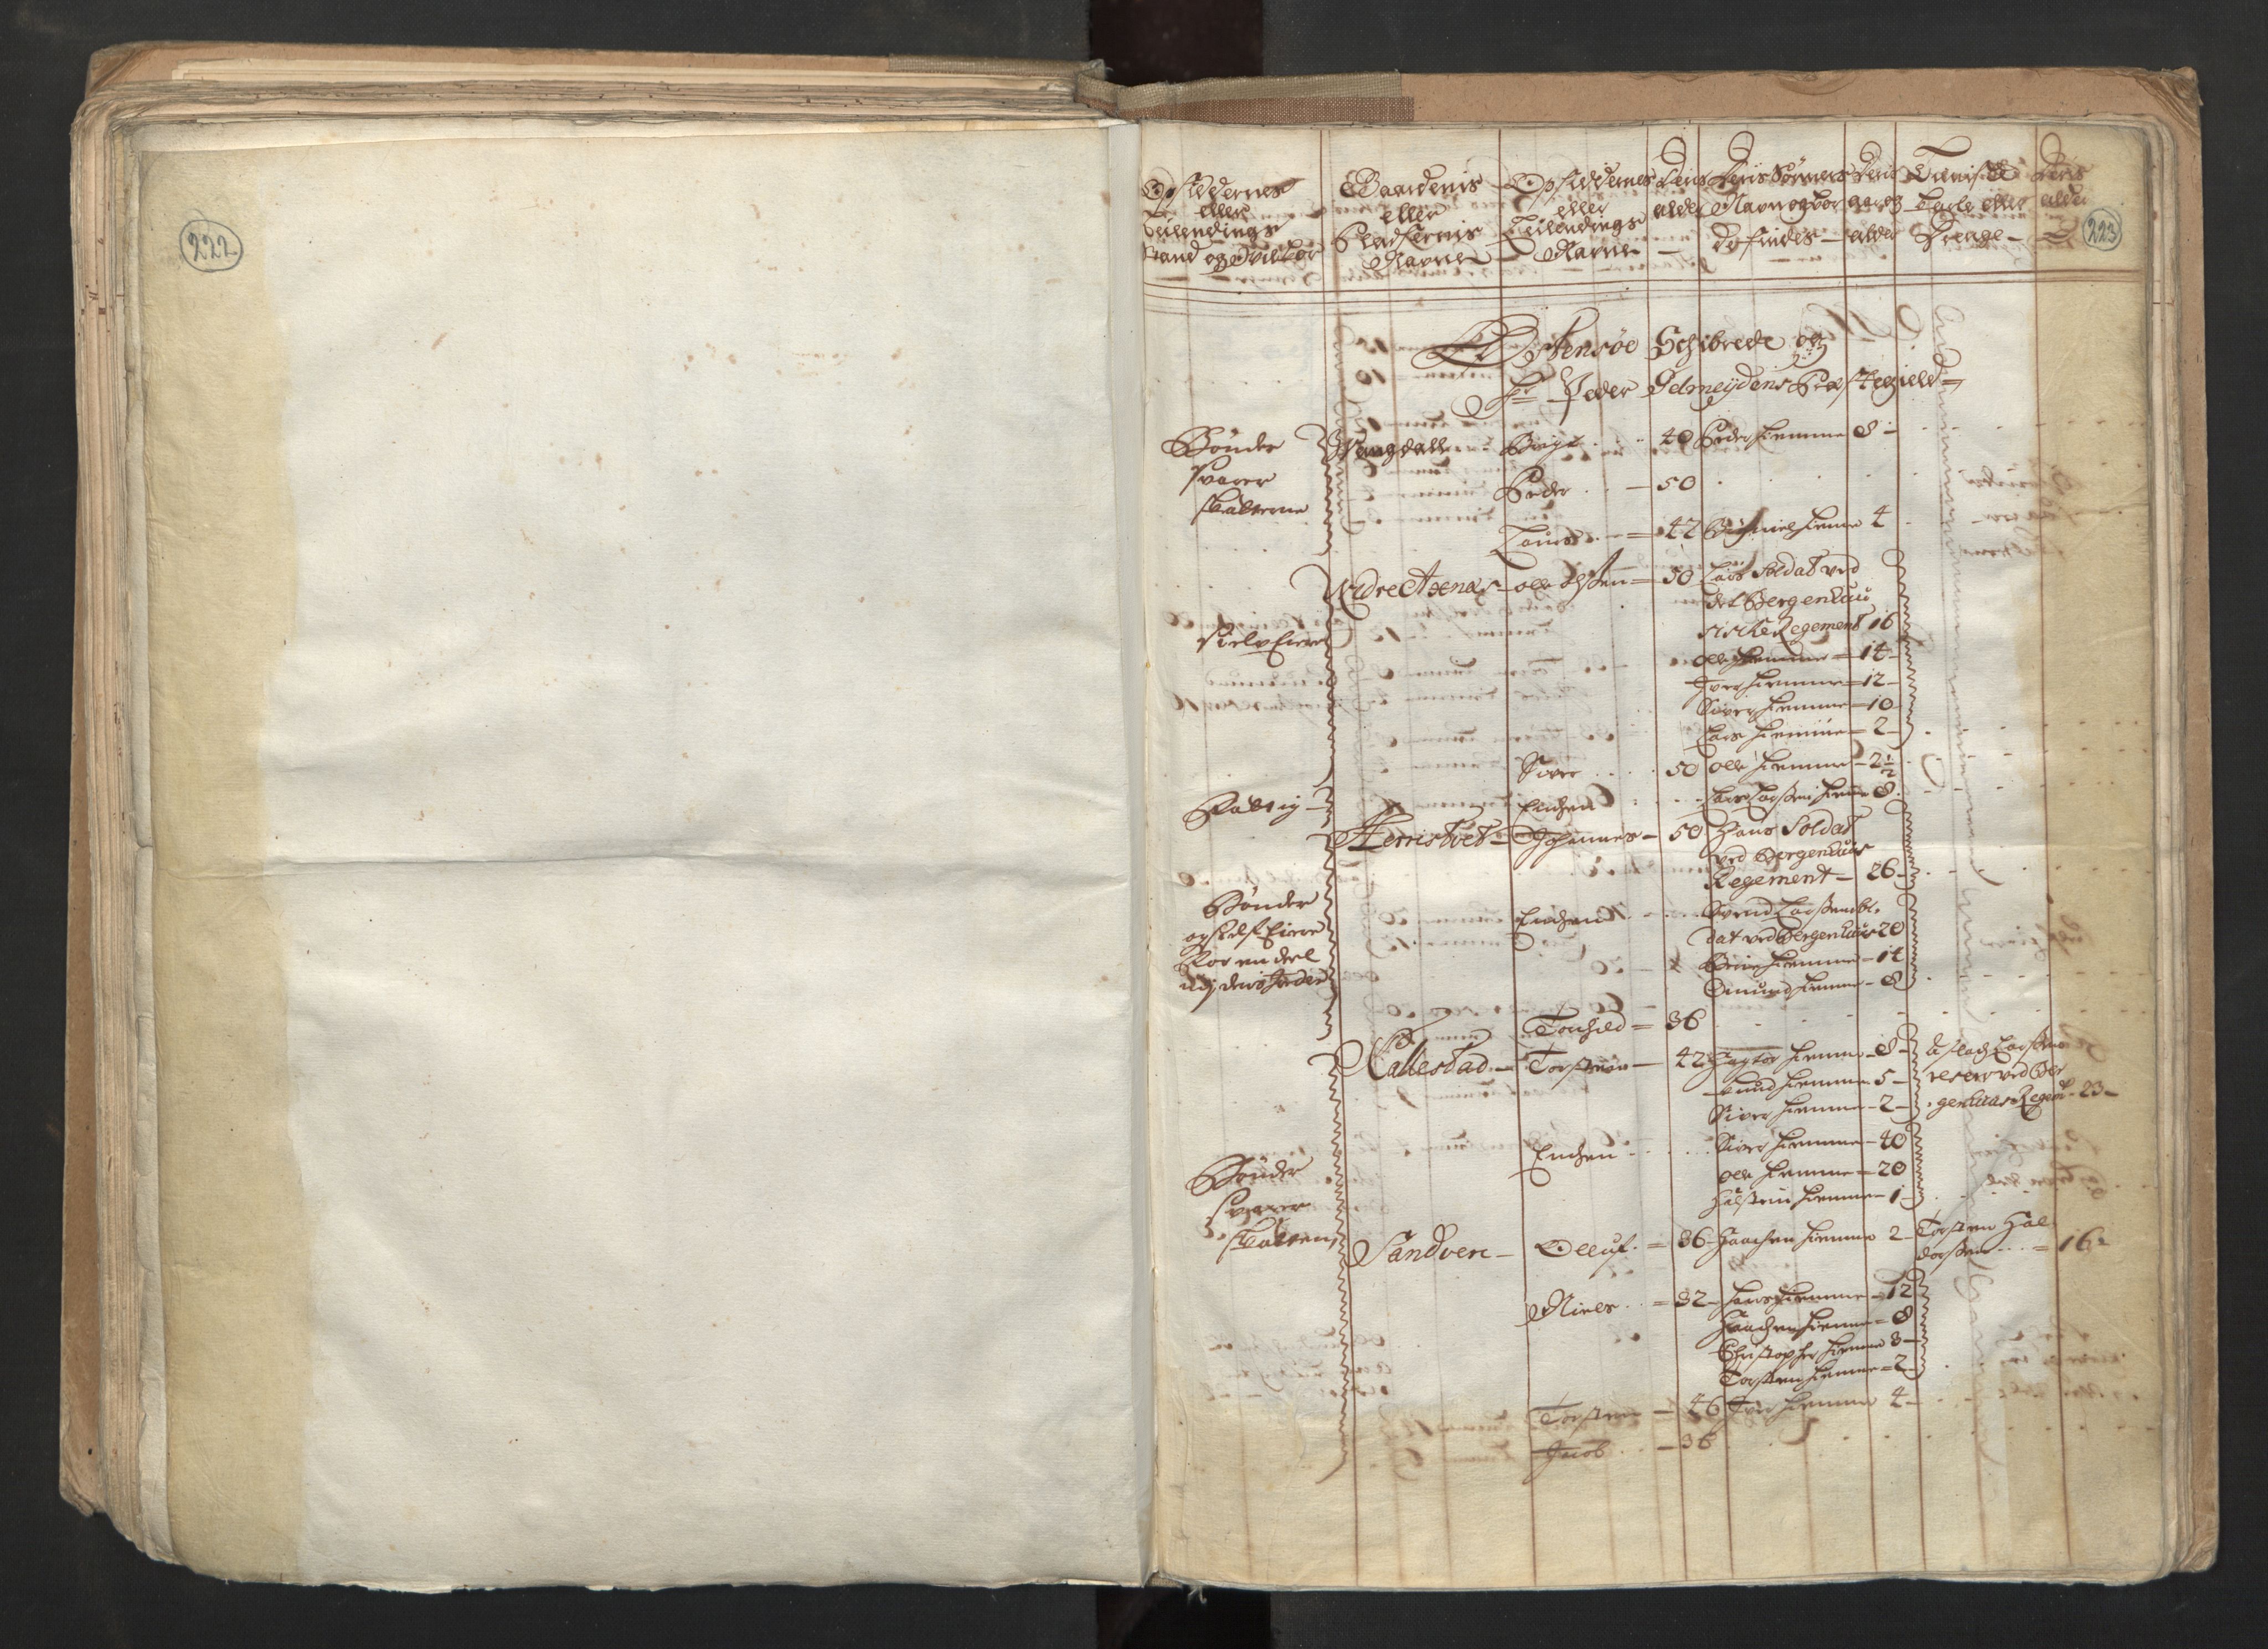 RA, Census (manntall) 1701, no. 6: Sunnhordland fogderi and Hardanger fogderi, 1701, p. 222-223